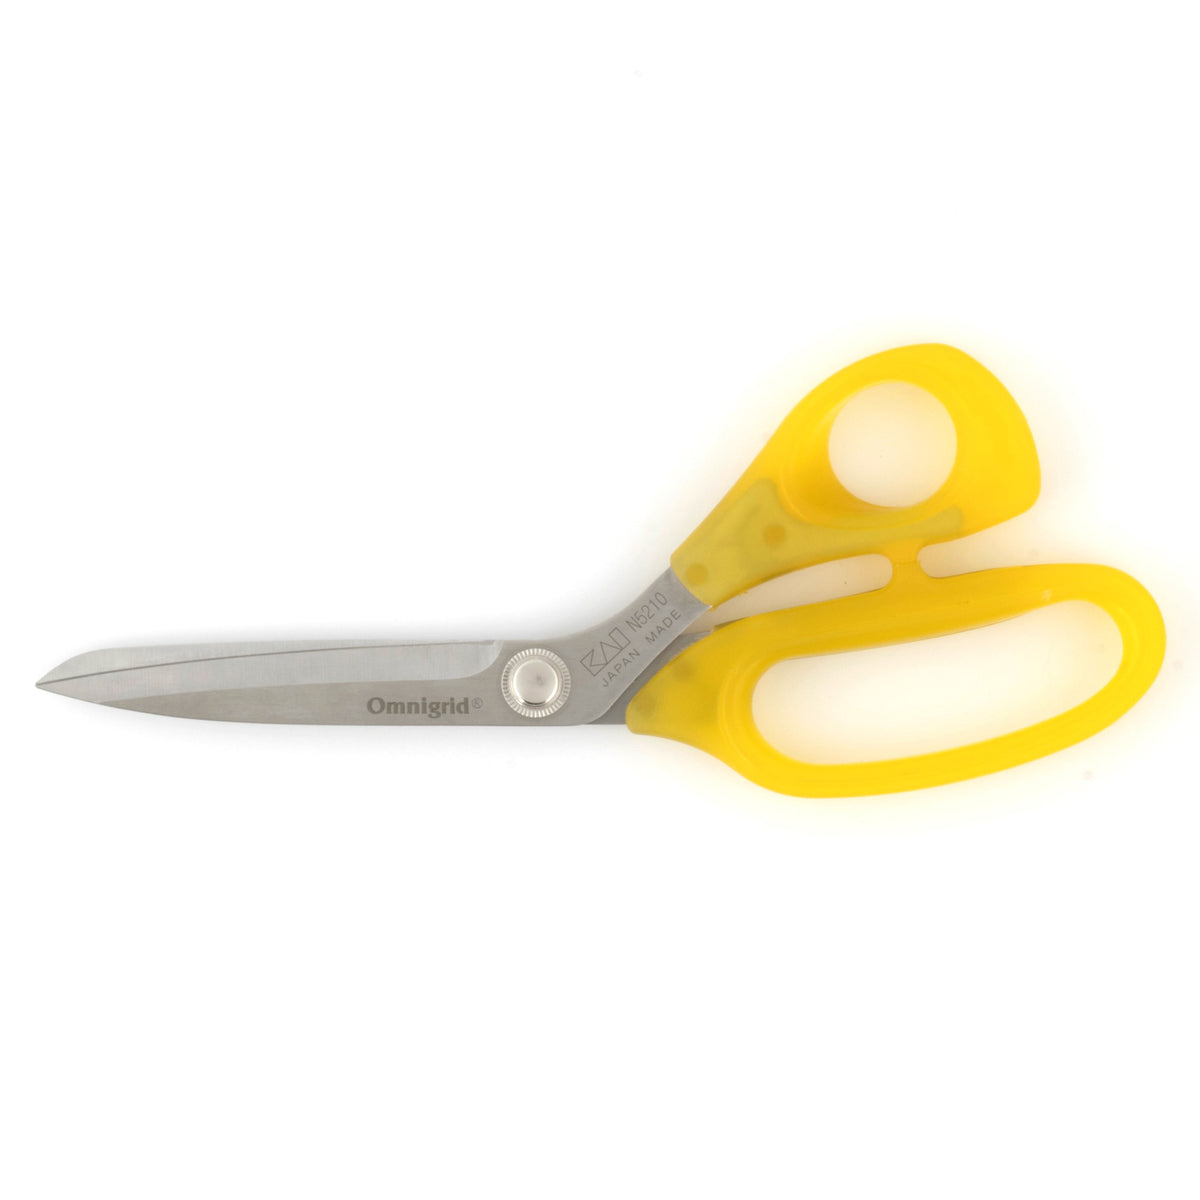 Scissors & Snips - KAI/ Omnigrid Thread Snips # 2063 - Very Sharp